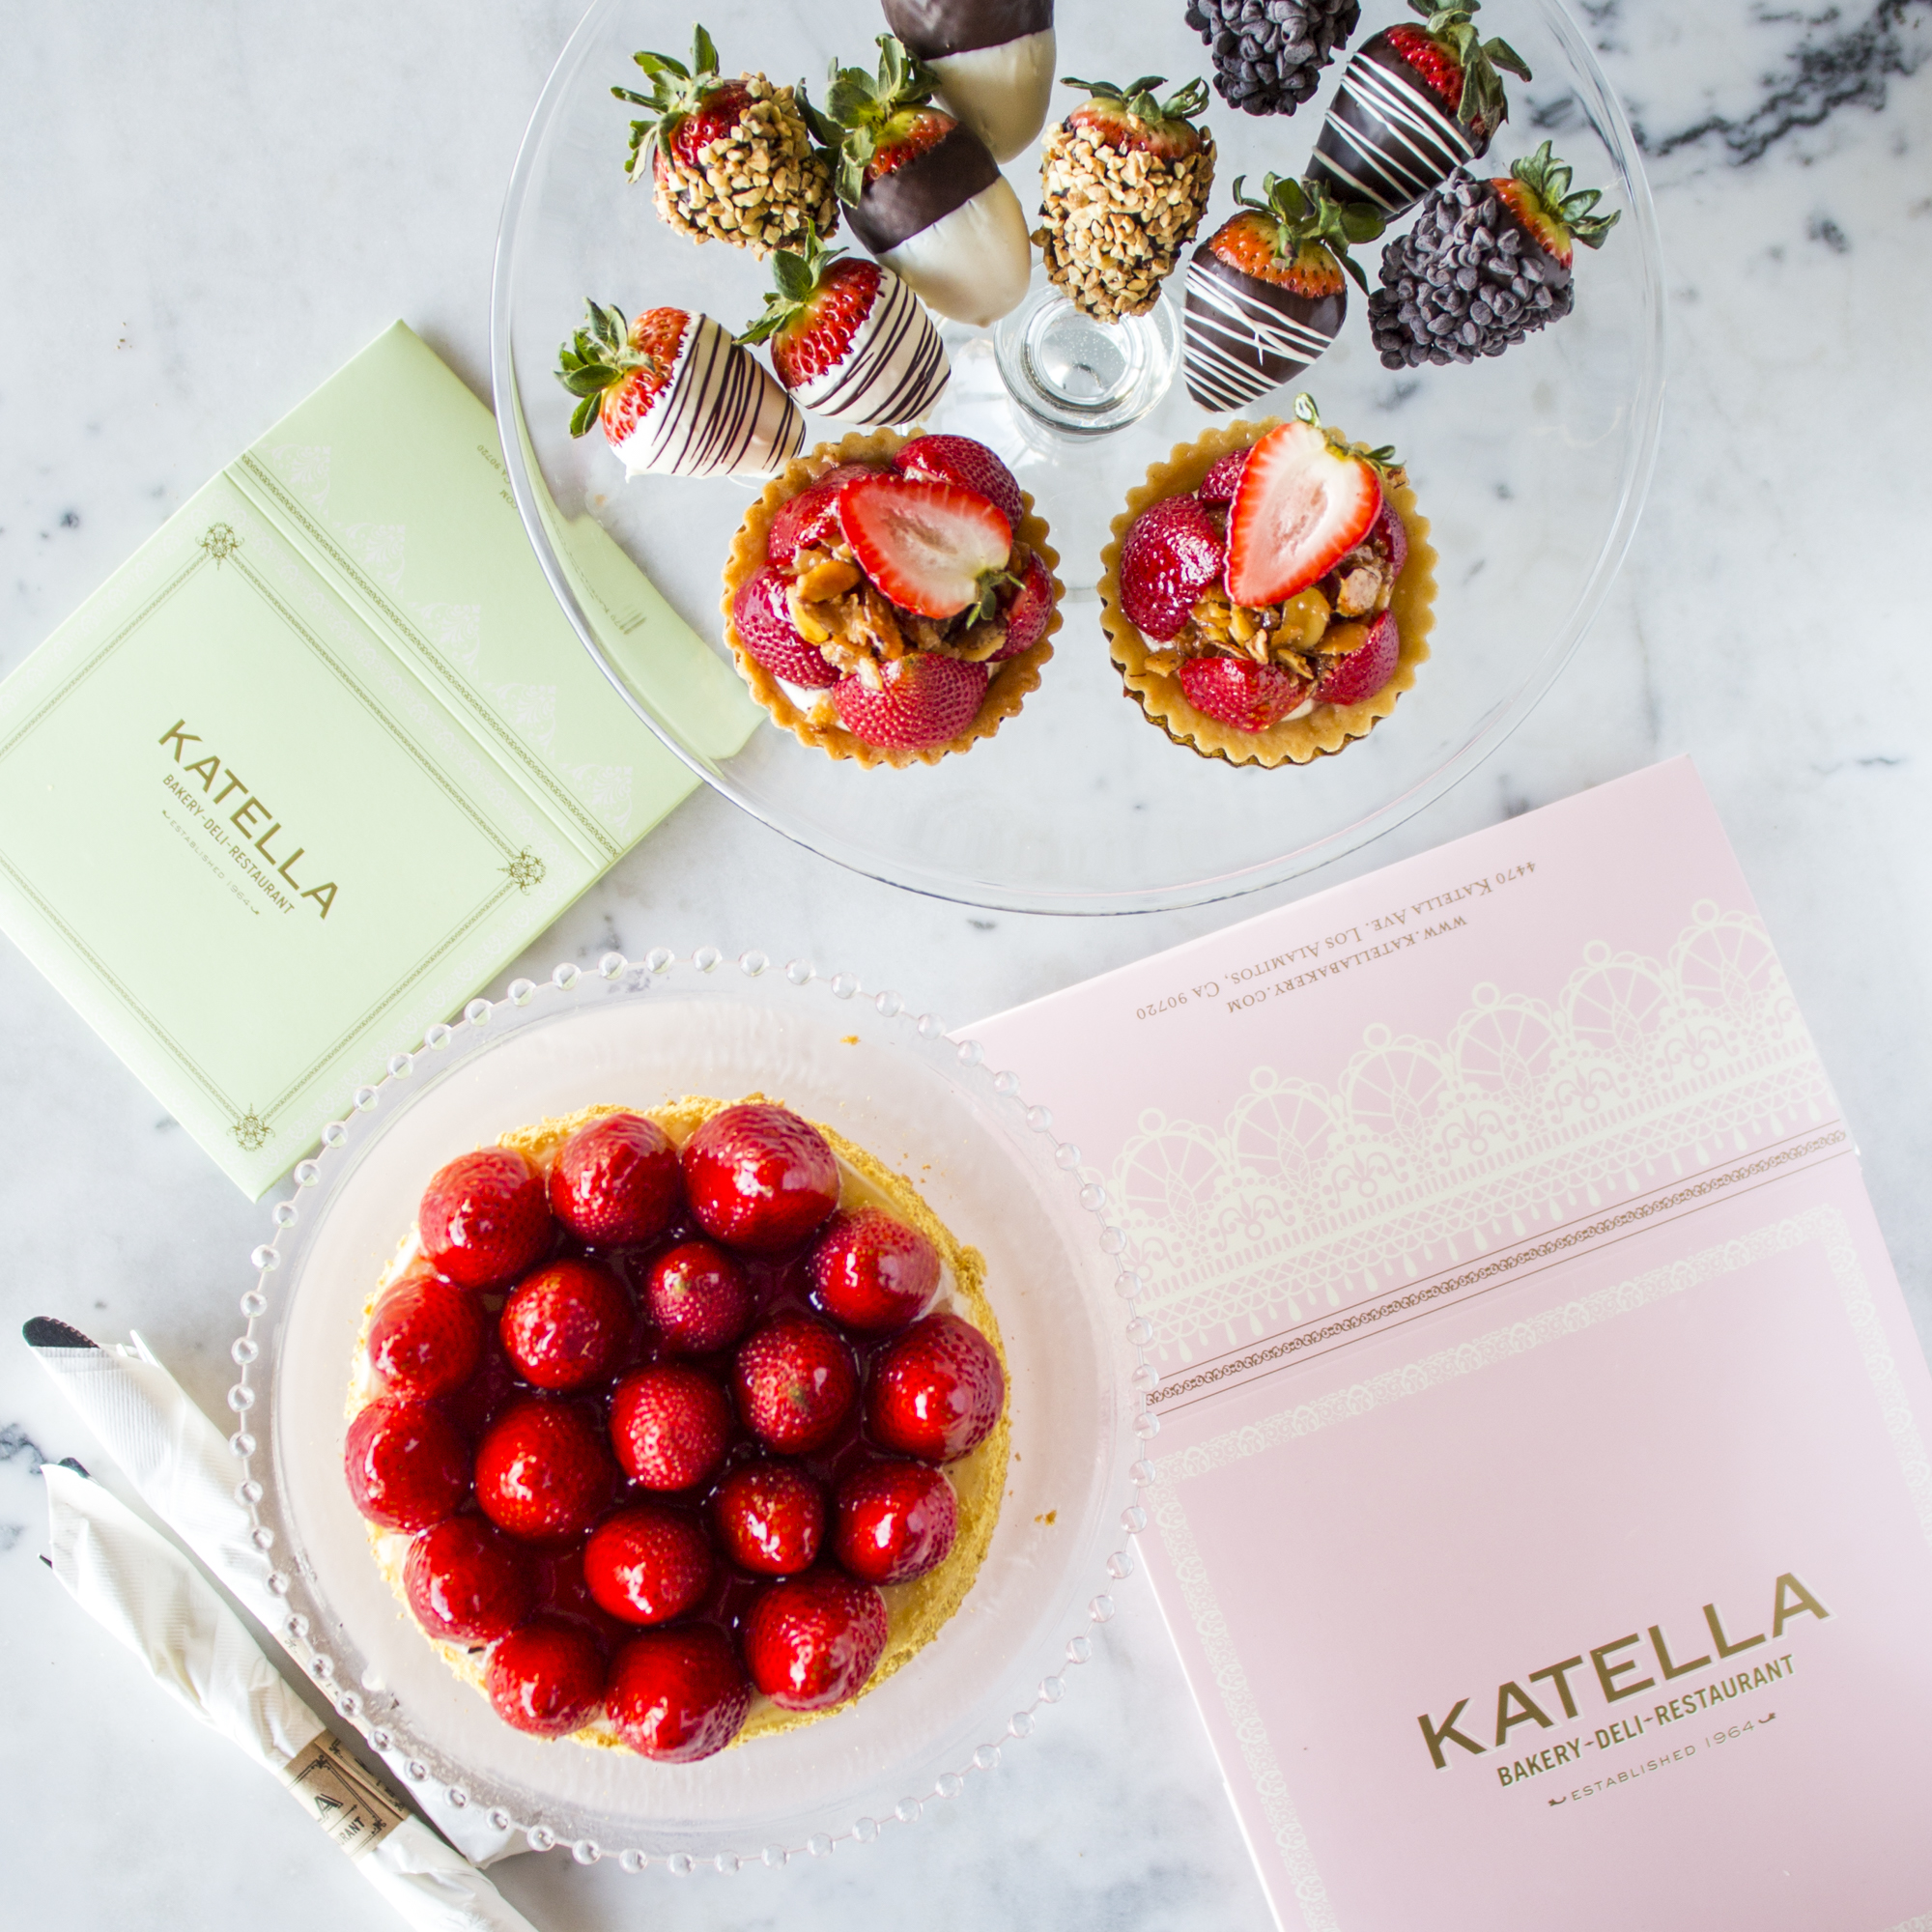 Katella Bakery display of specialty desserts highlighting fresh strawberries